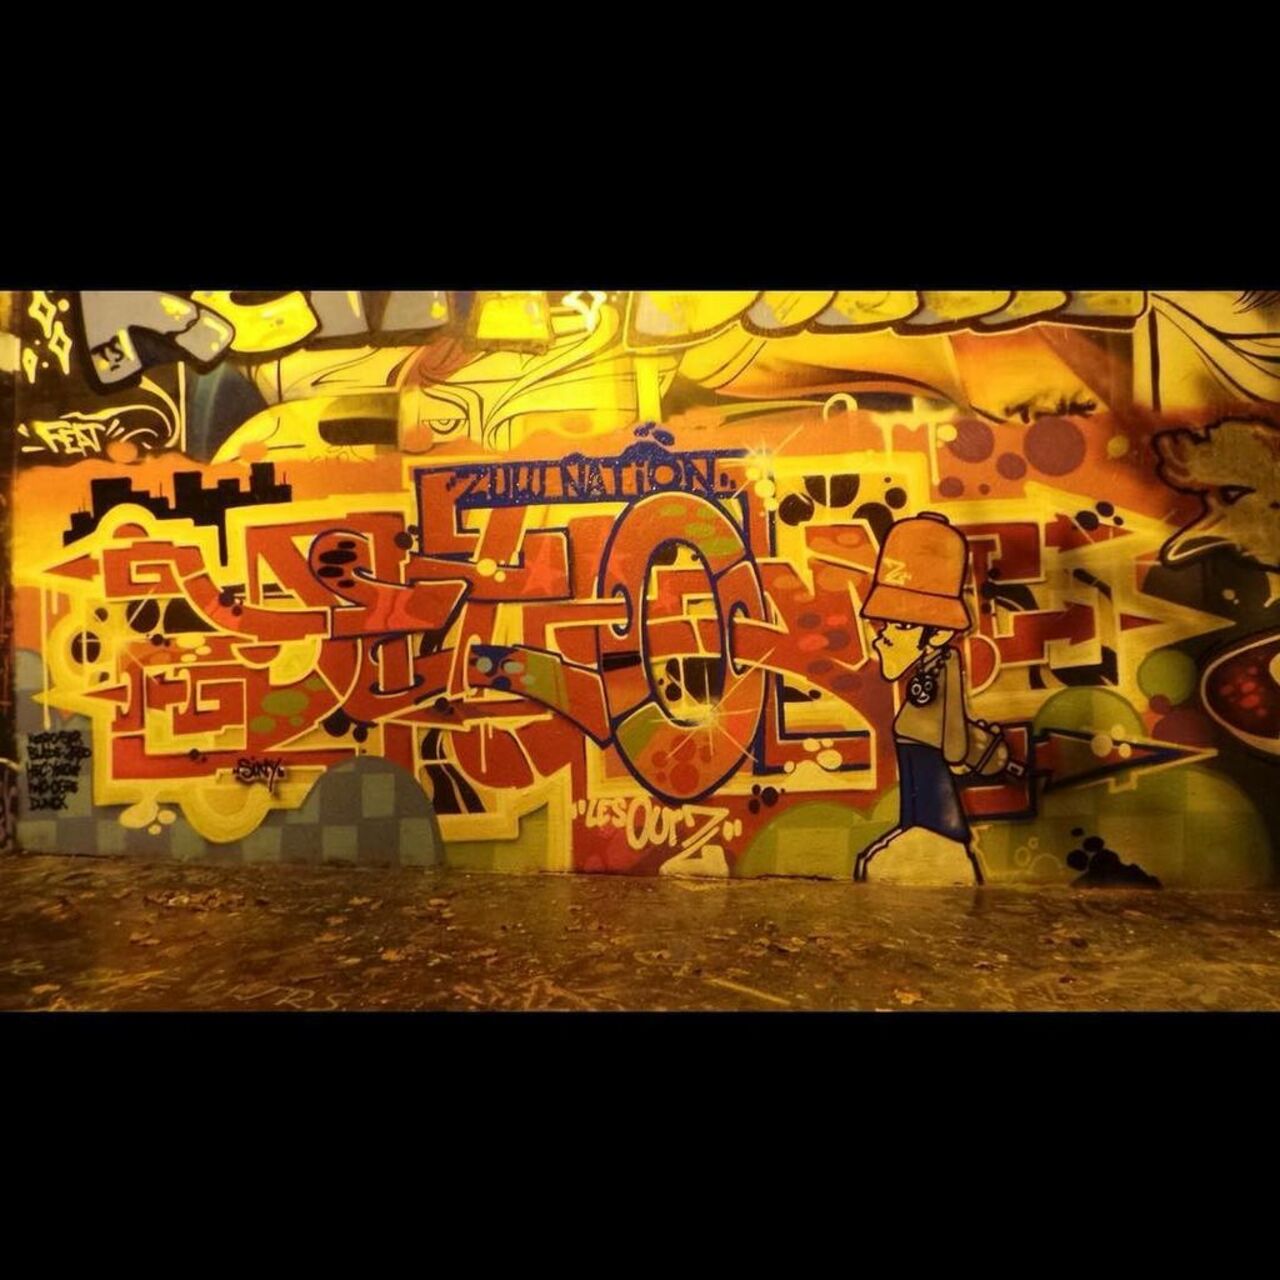 #yellow #zulunation #siny #lesOurz  #streetart #lartestdanslarue #paint #graffiti #grafitt… http://ift.tt/1W80cYj https://t.co/fZsh9dG2f1